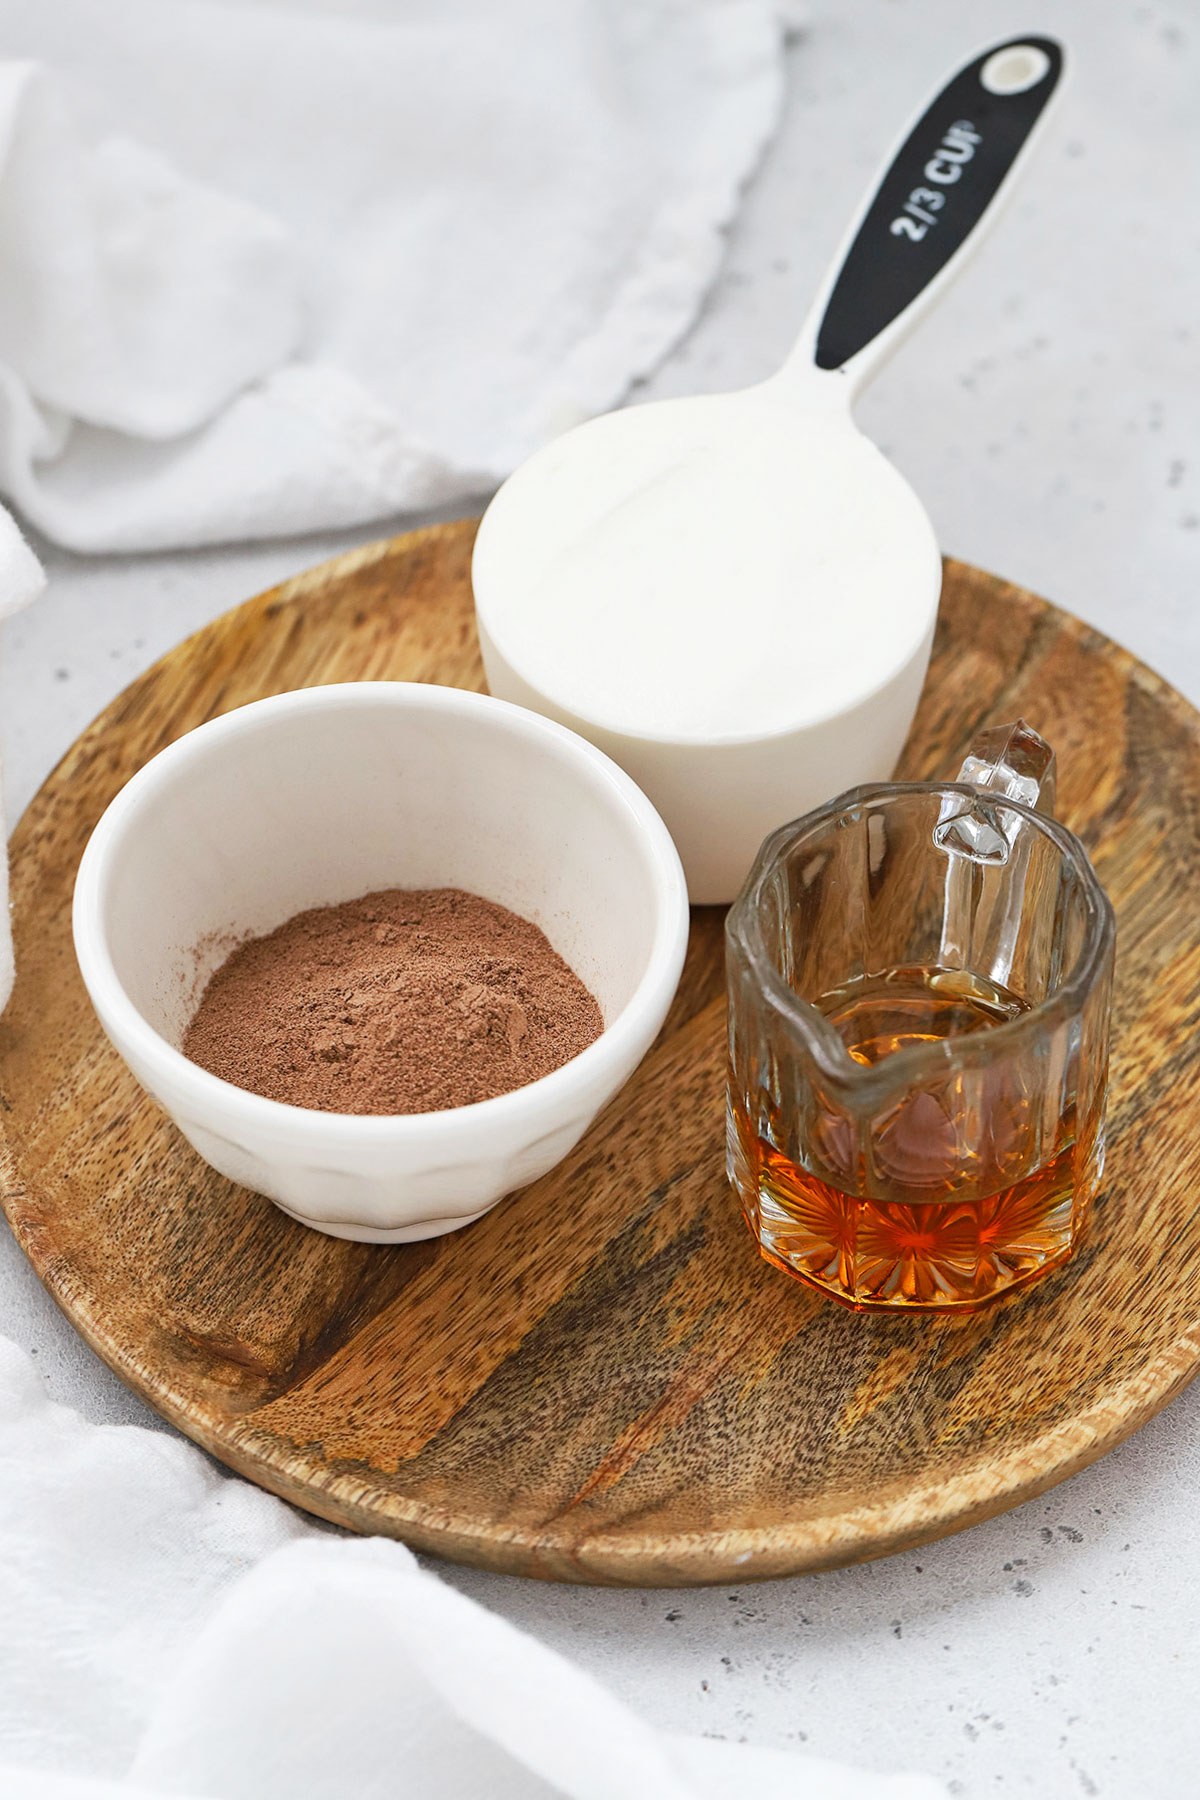 Ingredients for chocolate protein yogurt bowls